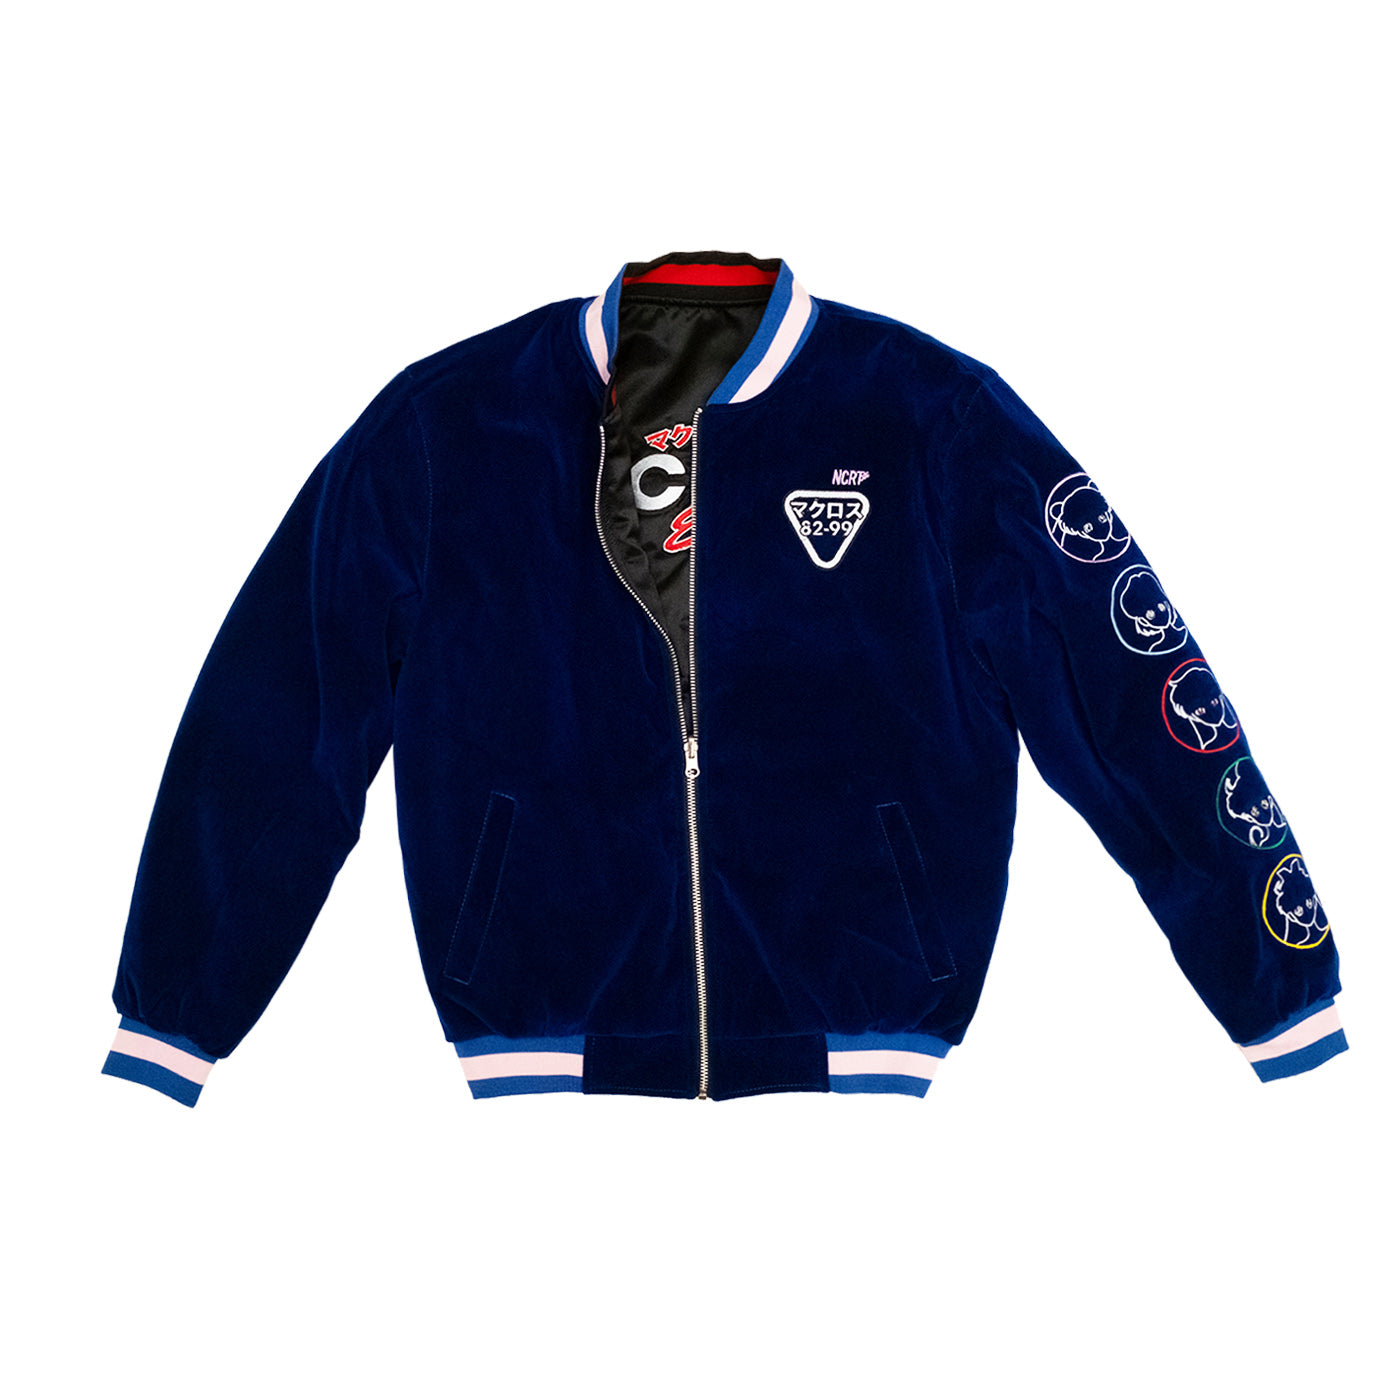 Macross 82-99 Reversible Jacket 3.0